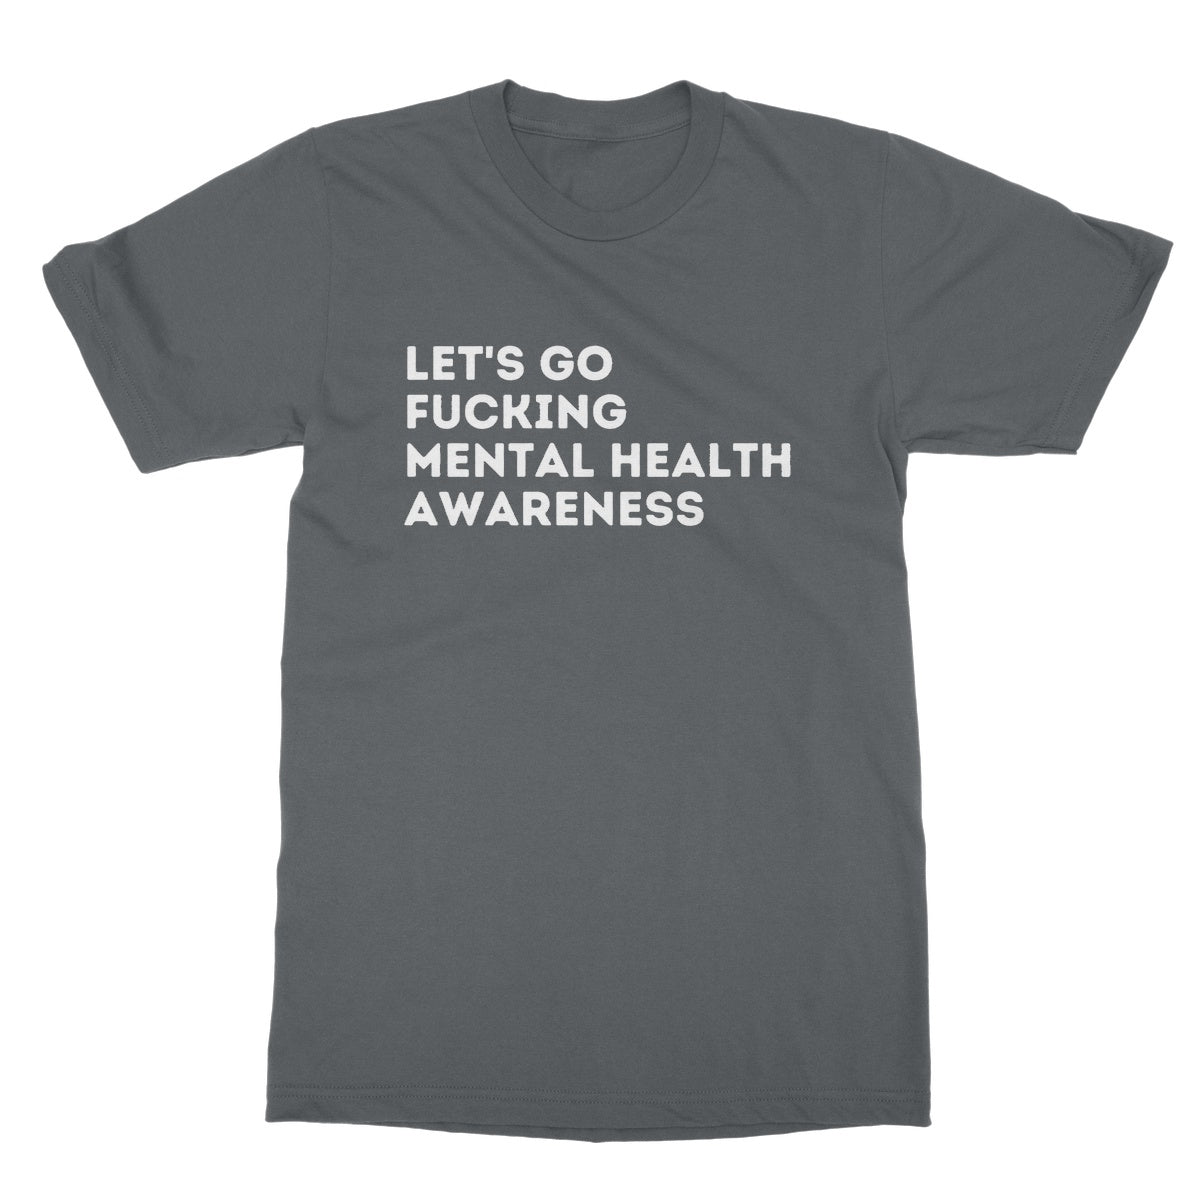 let's go fucking mental health awareness t shirt grey